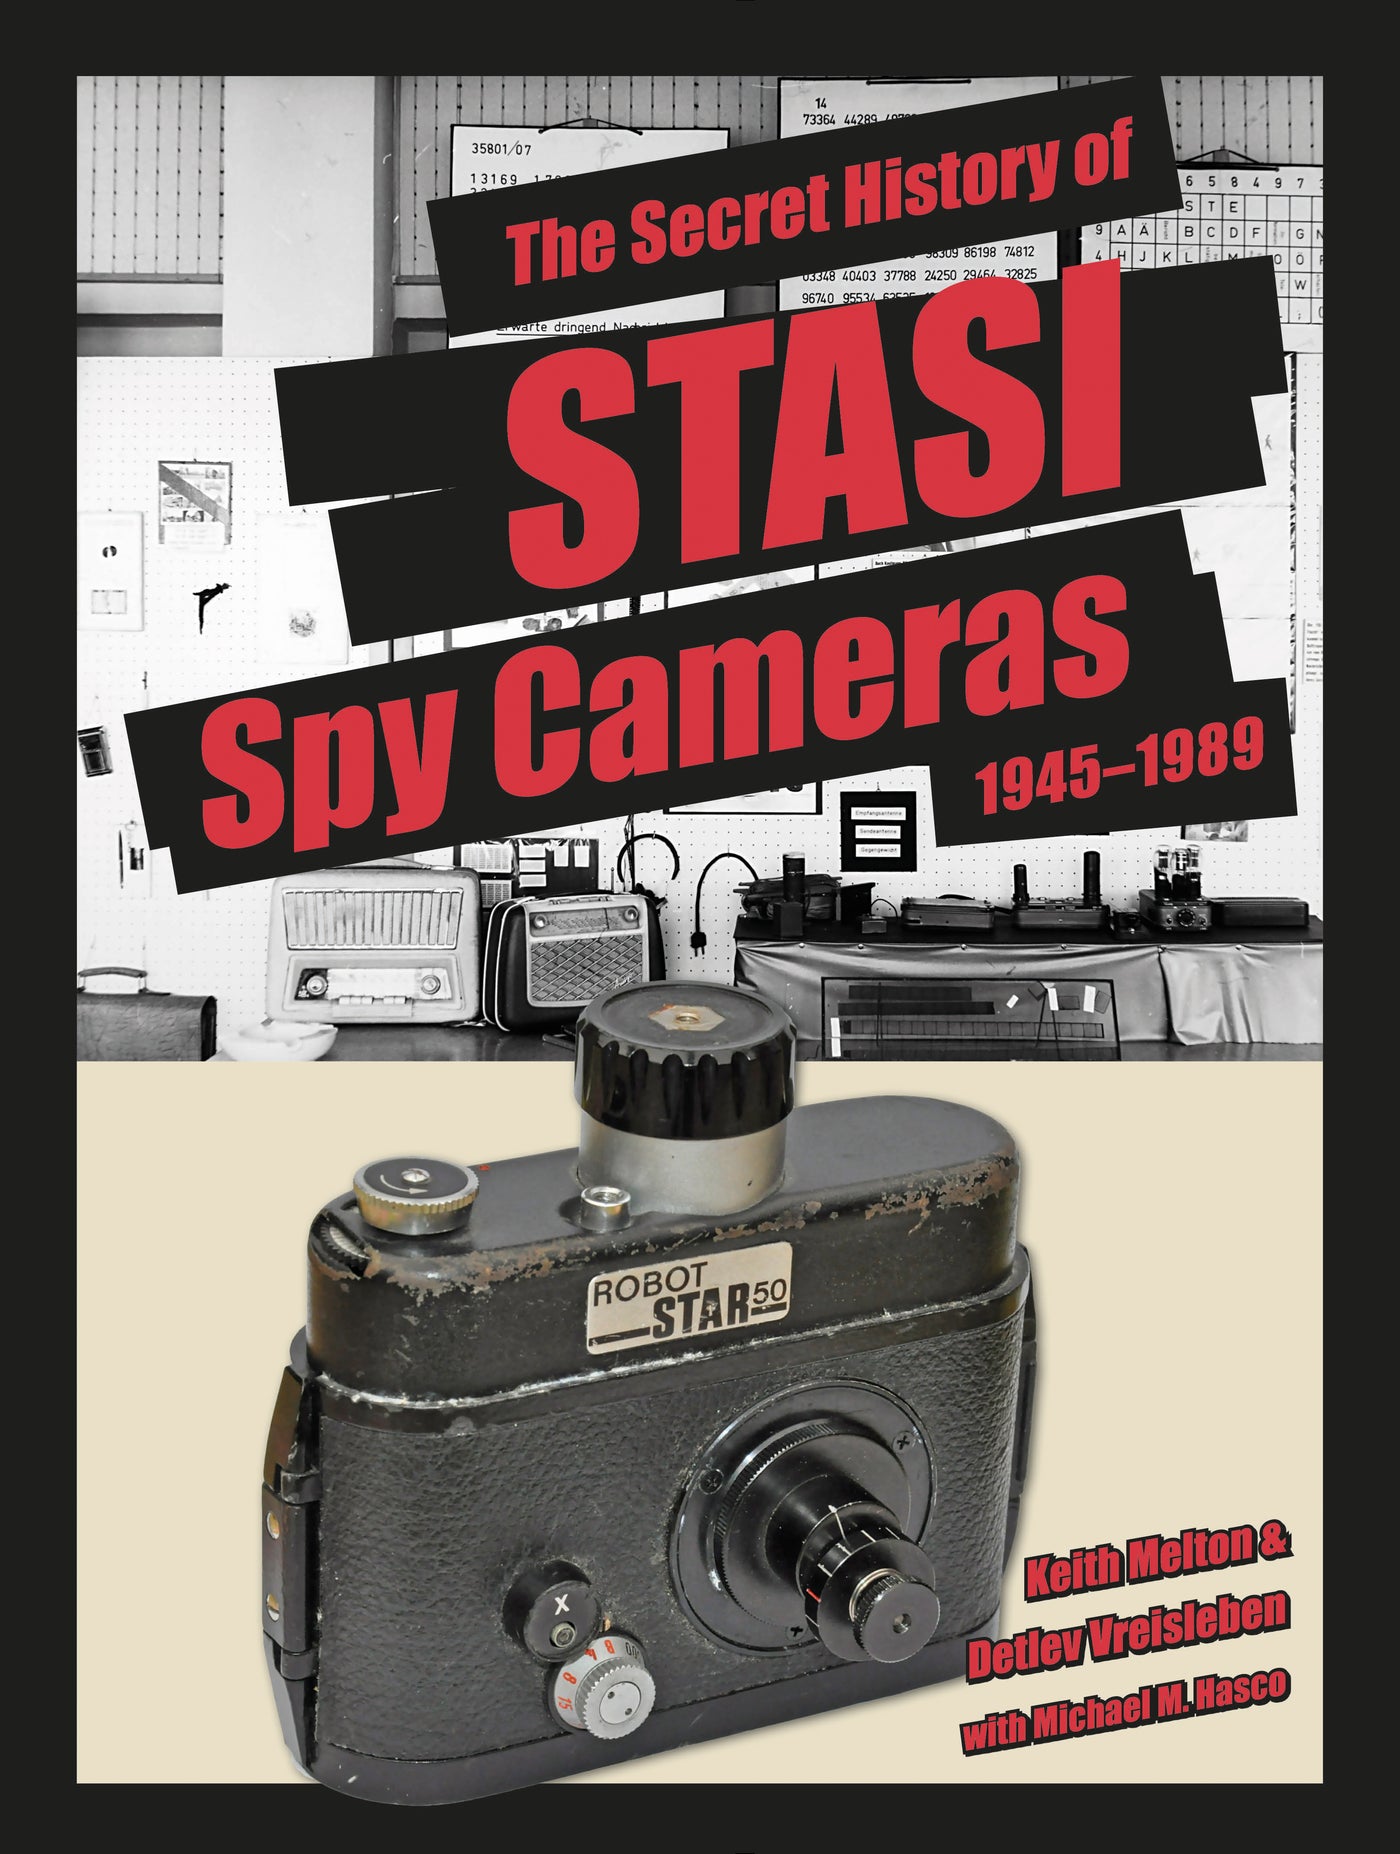 The Secret History of STASI Spy Cameras